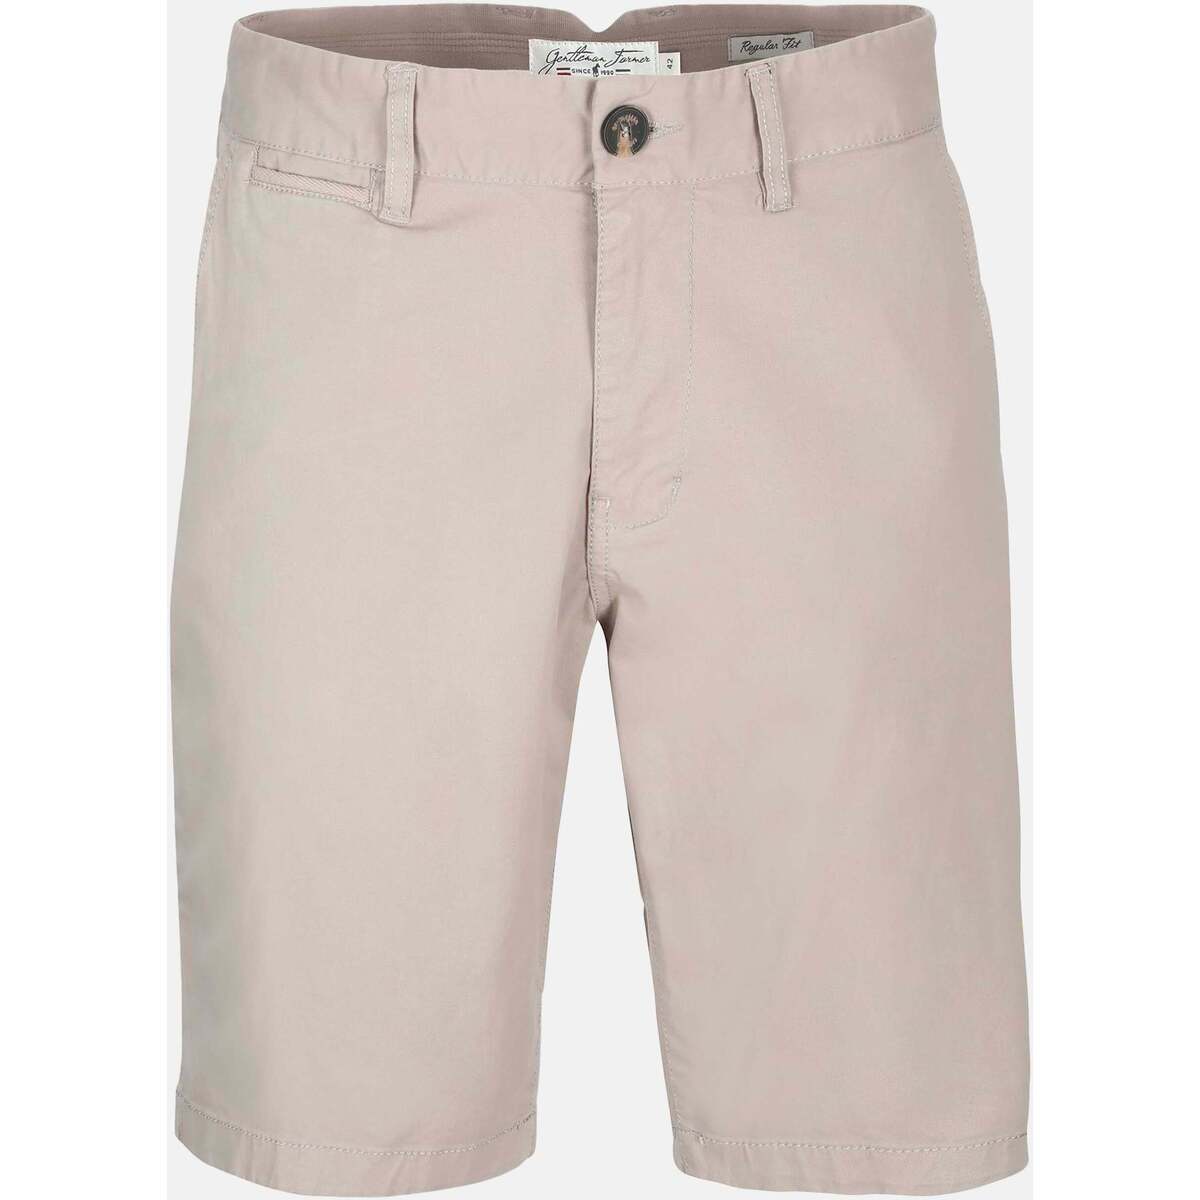 Vêtements Homme Shorts / Bermudas Gentleman Farmer SOAN Gris